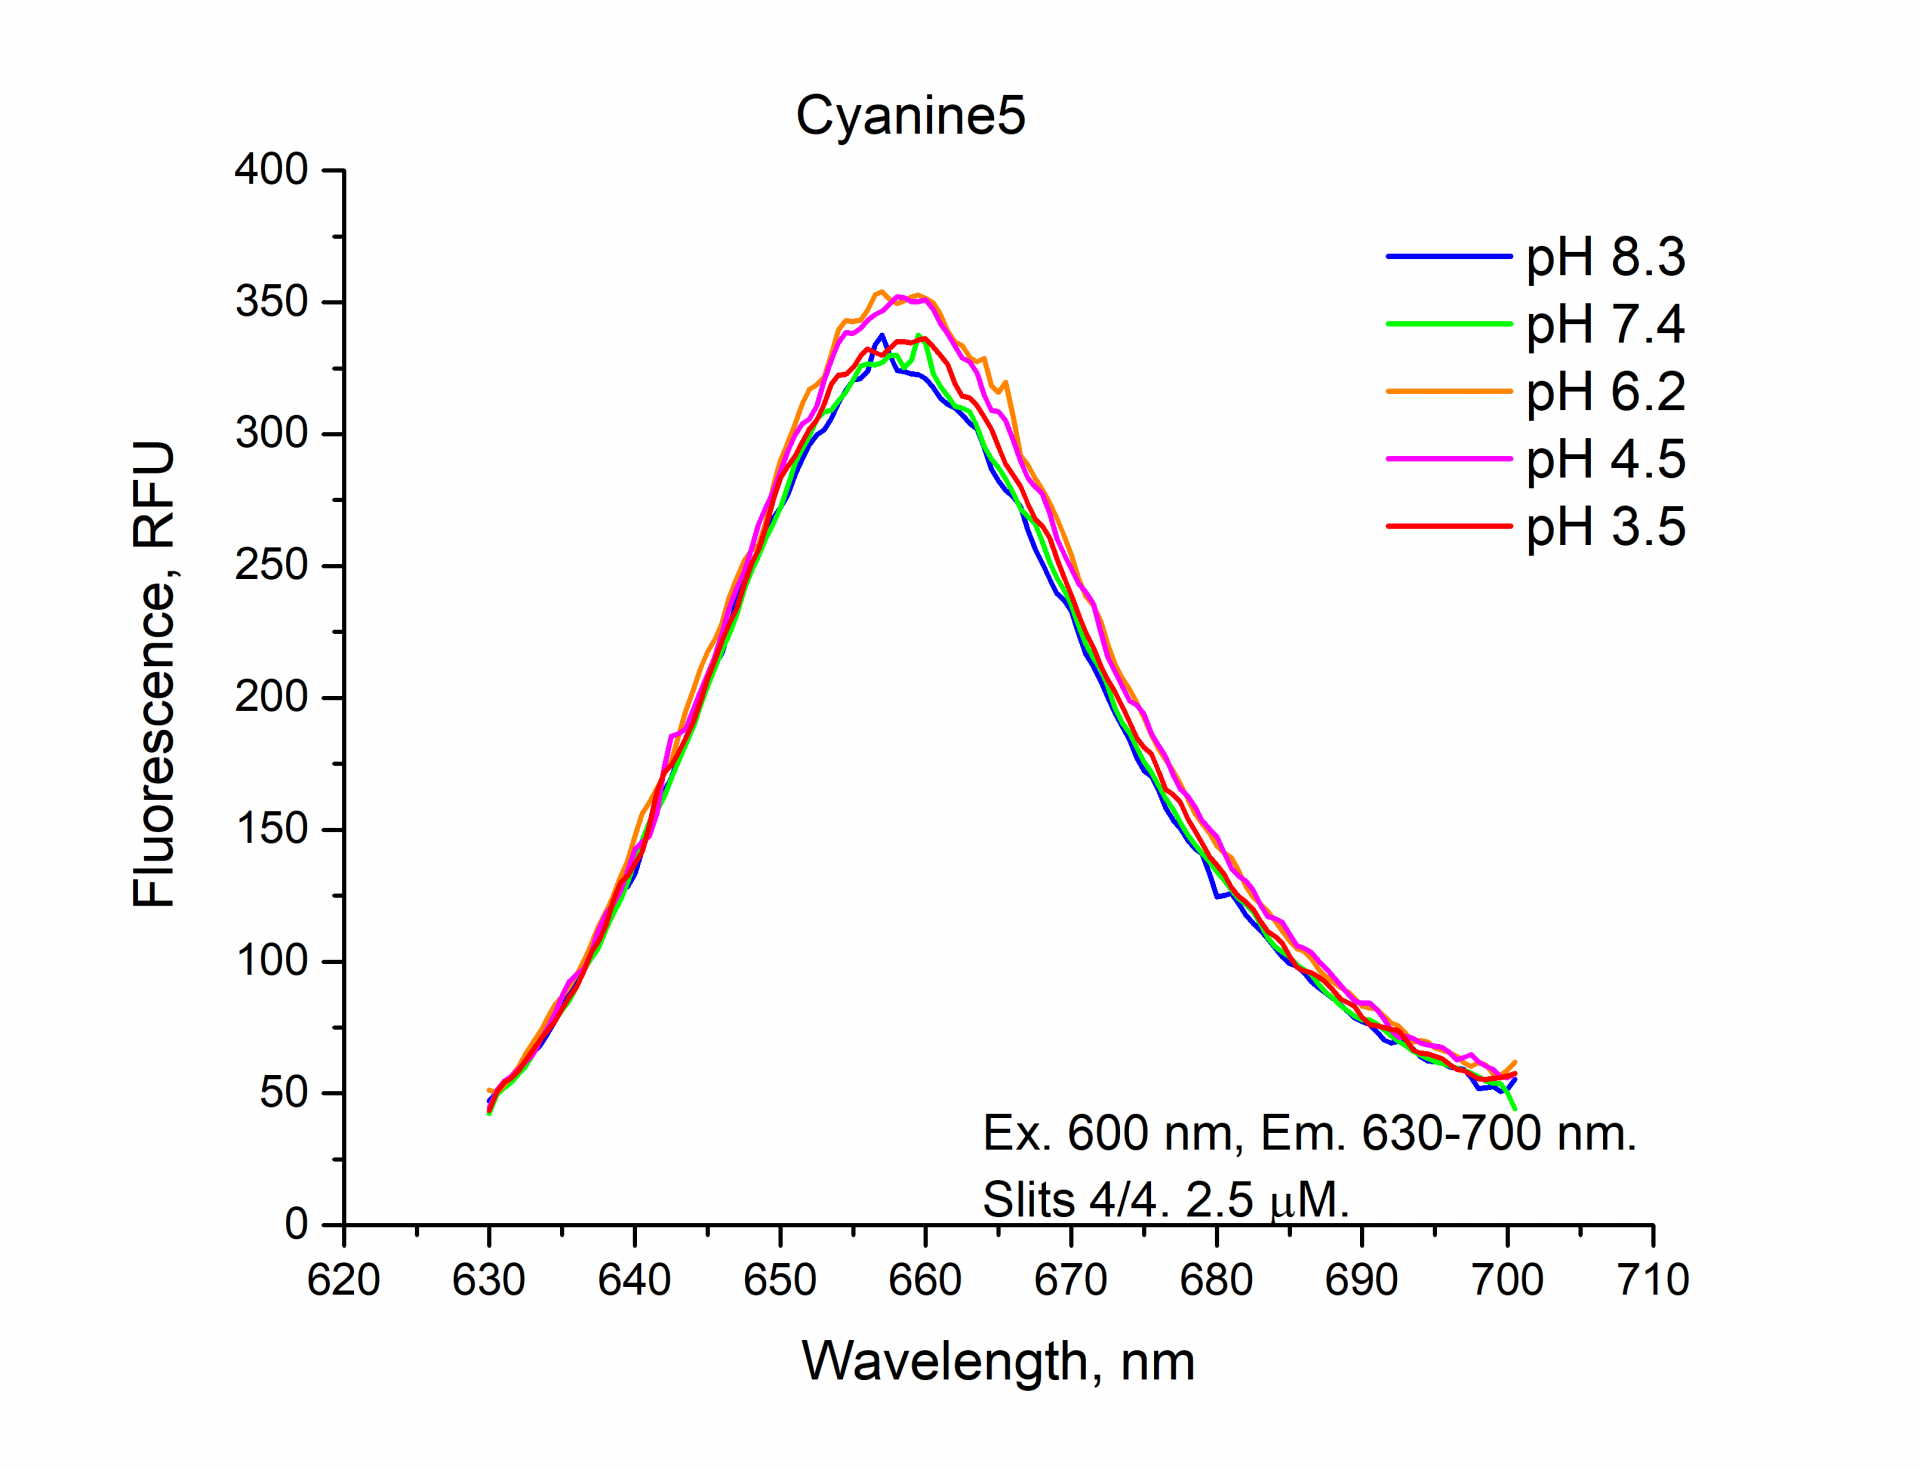 Fluorescence emission spectrum of Cyanine5 depending on pH